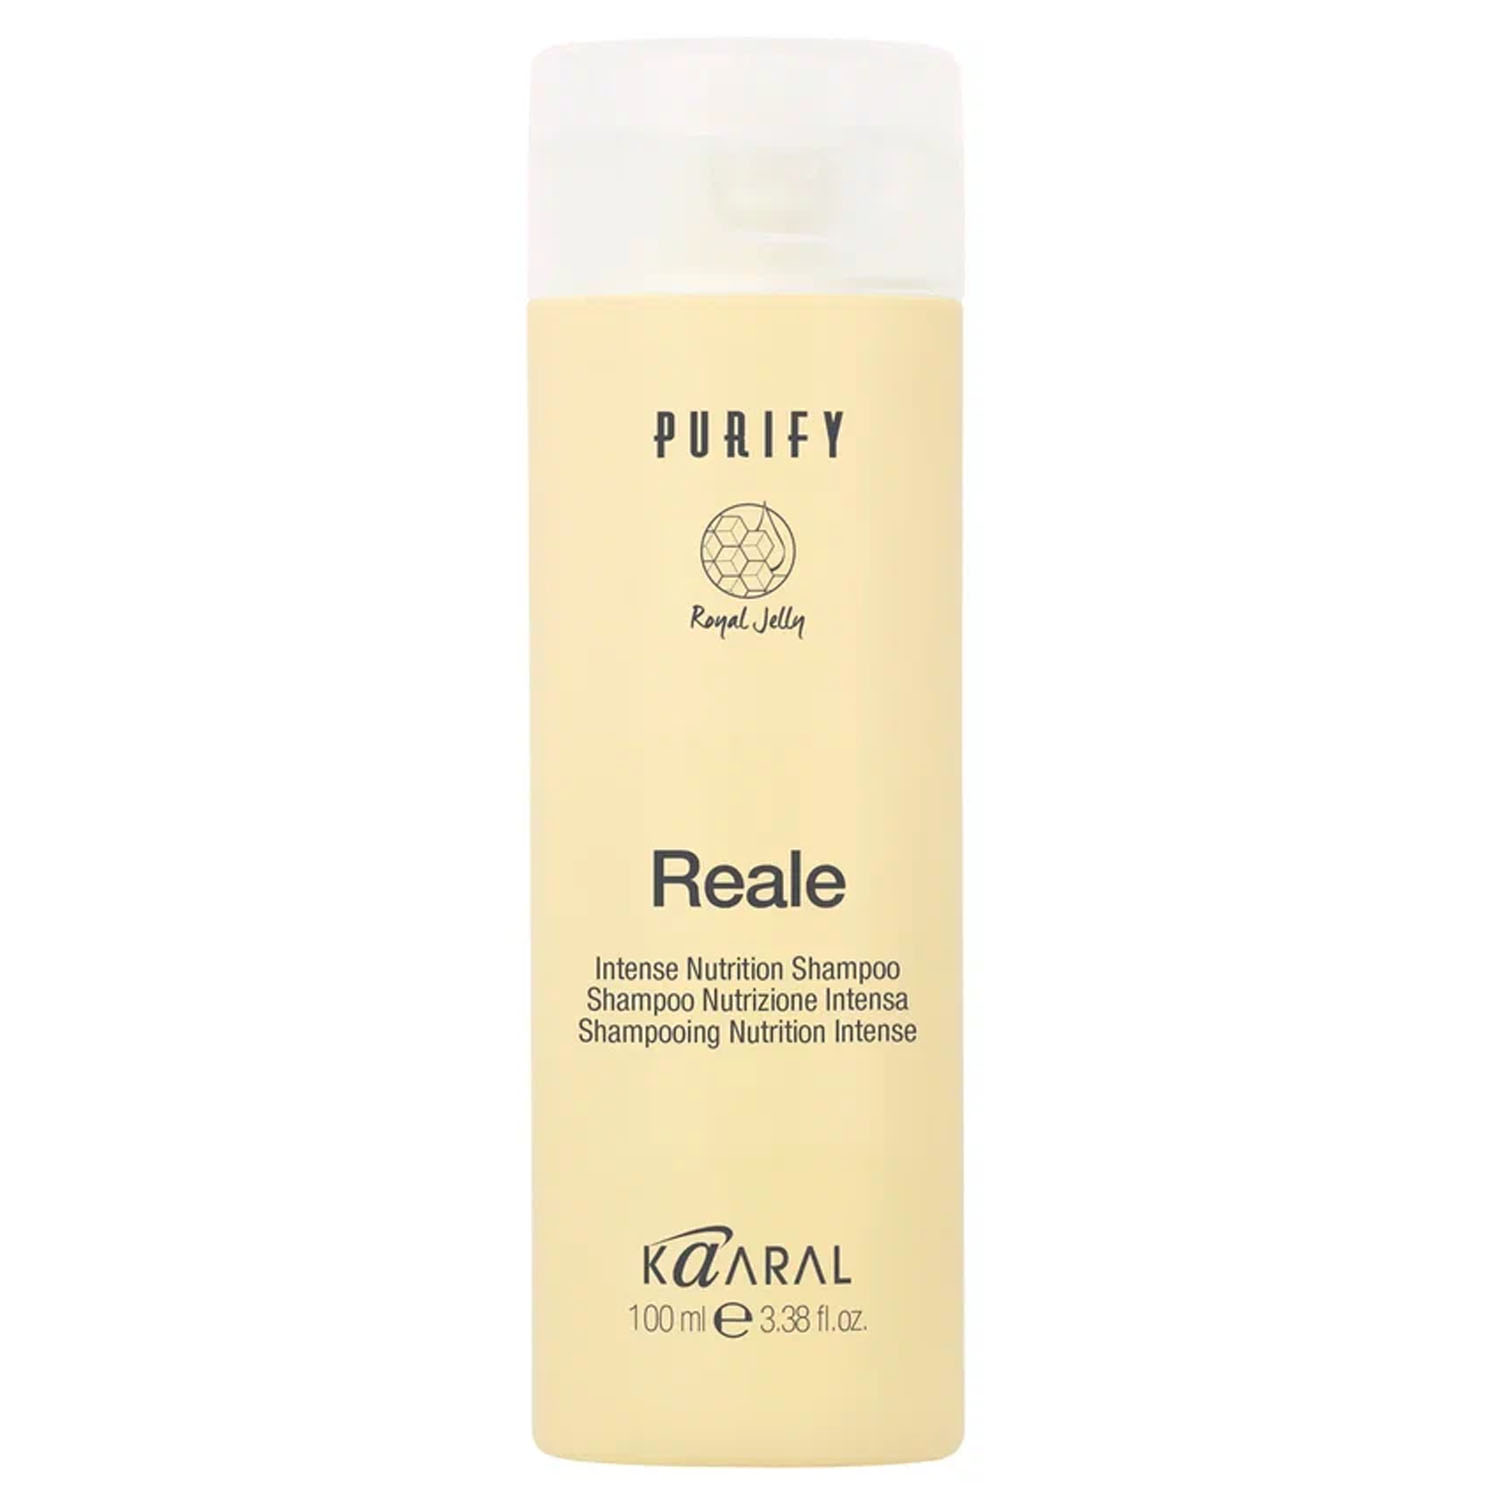 Kaaral Восстанавливающий шампунь для поврежденных волос Reale Intense Nutrition Shampoo, 100 мл (Kaaral, Purify) kaaral восстанавливающий шампунь для поврежденных волос intense nutrition shampoo 1000 мл kaaral purify